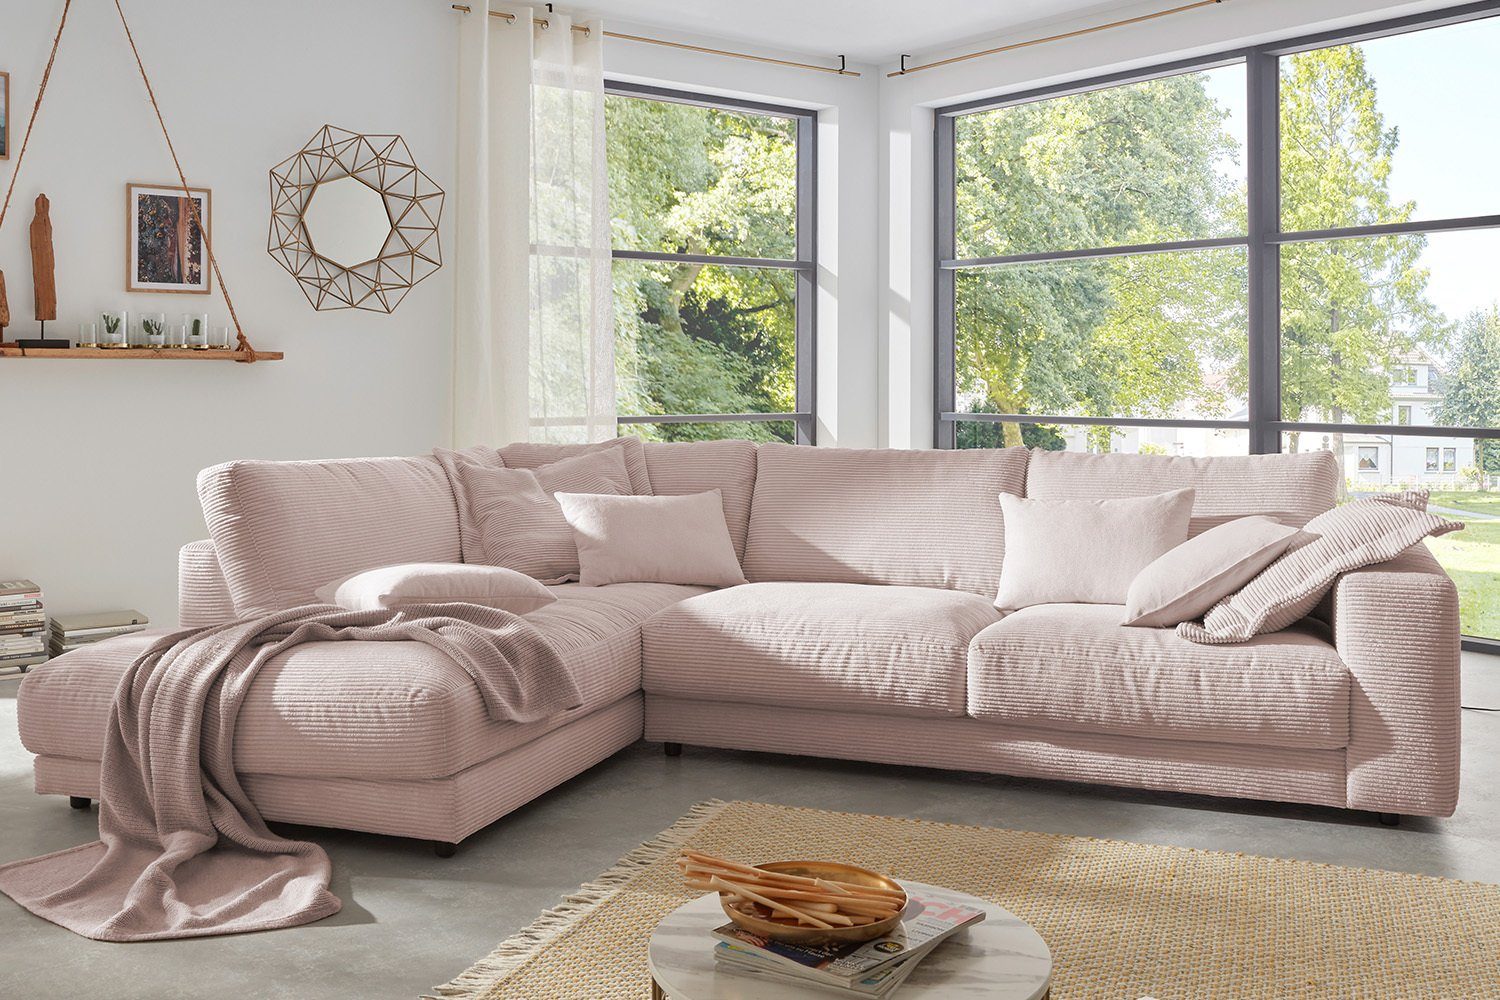 KAWOLA Ecksofa MADELINE, links, rechts rosa Cord, versch. Farben od. Recamiere Sofa